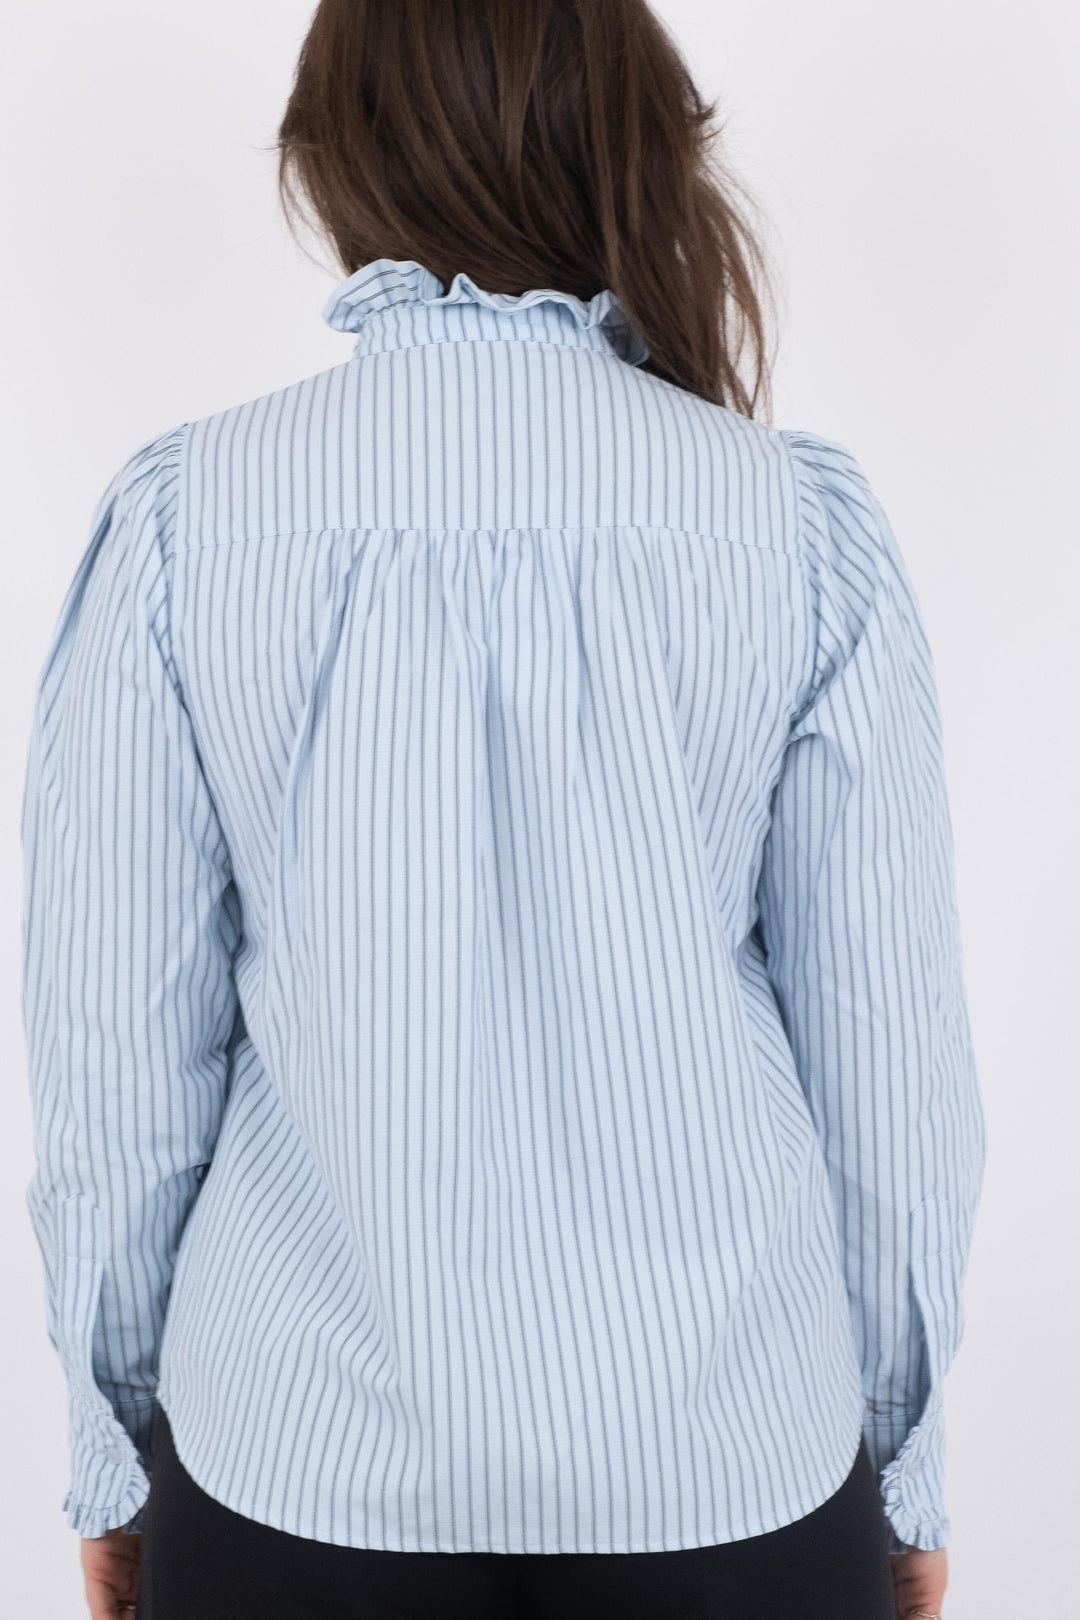 Neo Noir - Justine Stripe Shirt - Light Blue